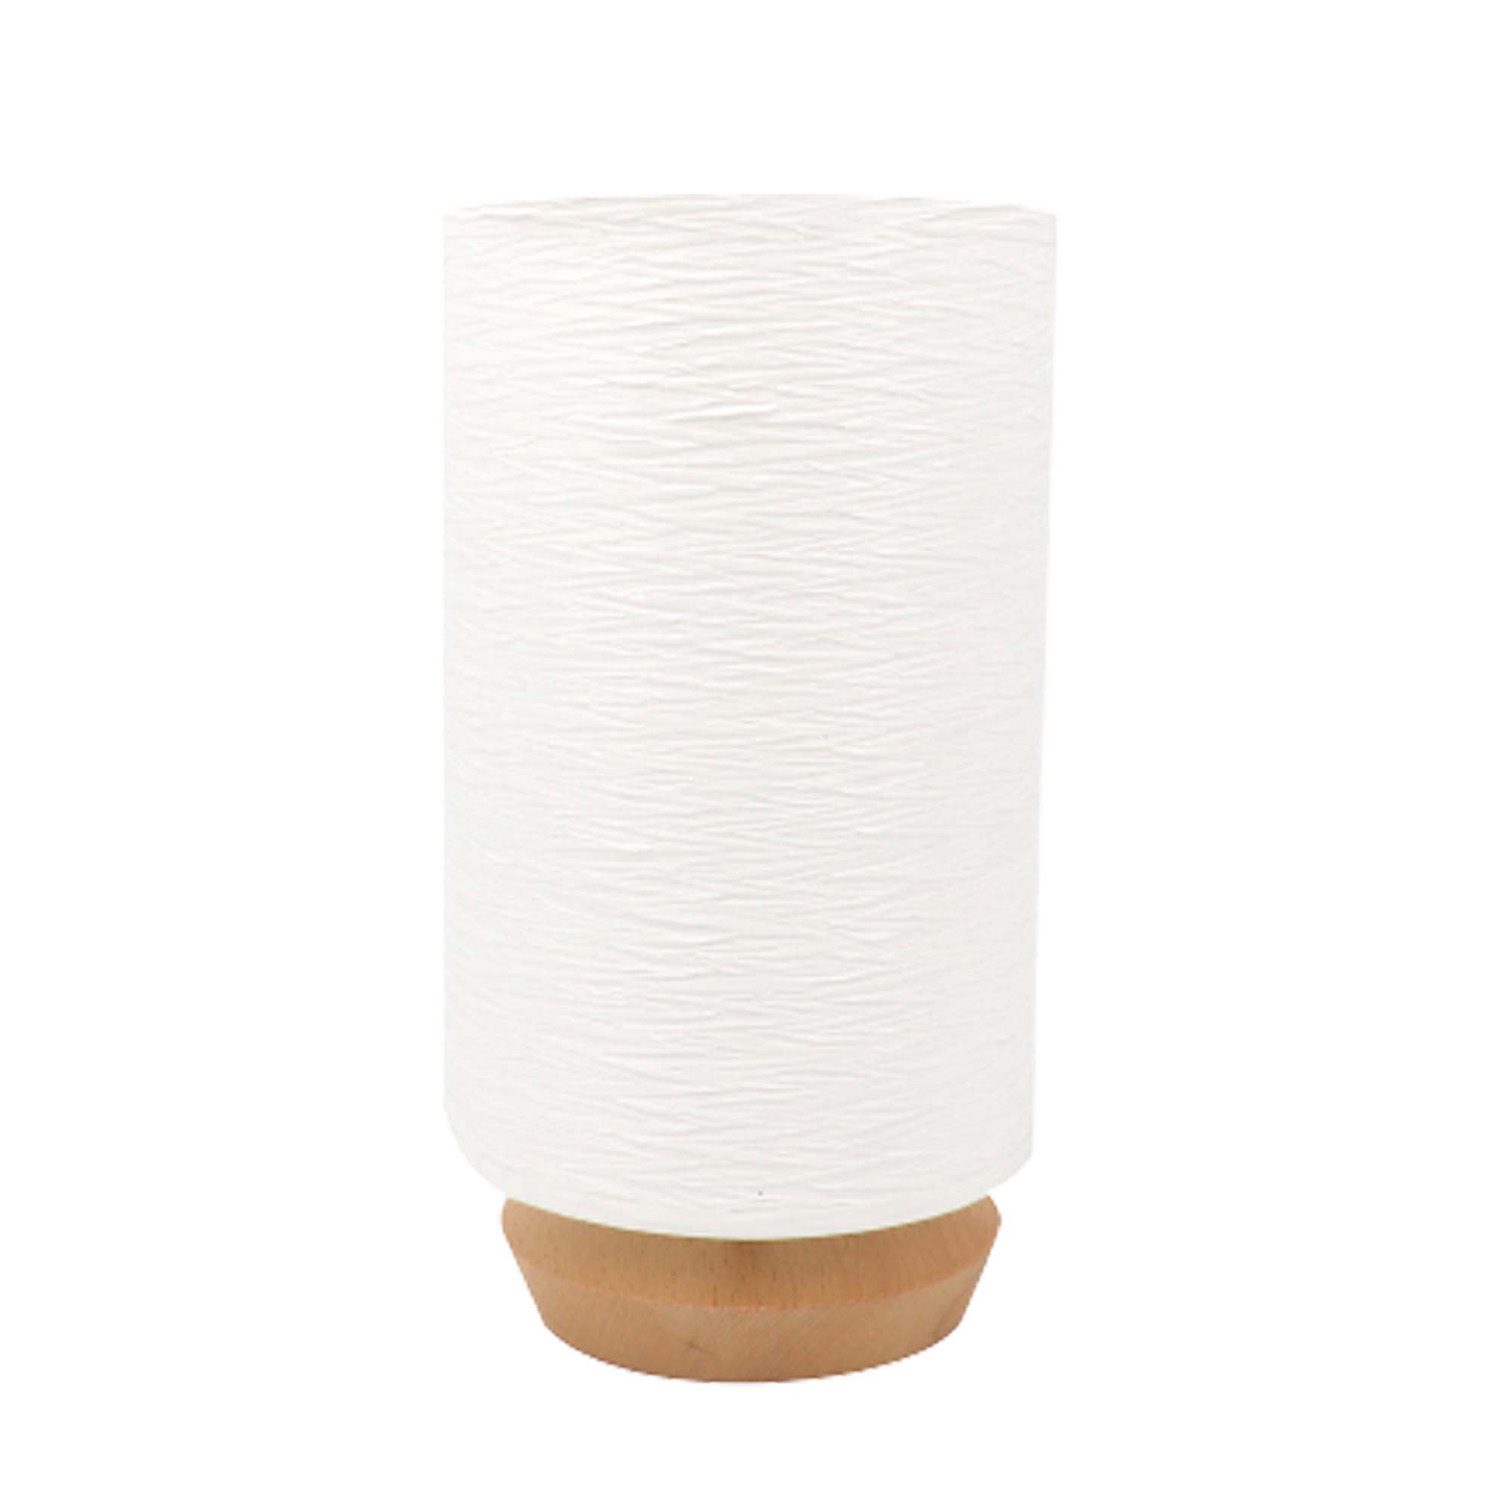 Woodward Cylinder Table Lamp - White